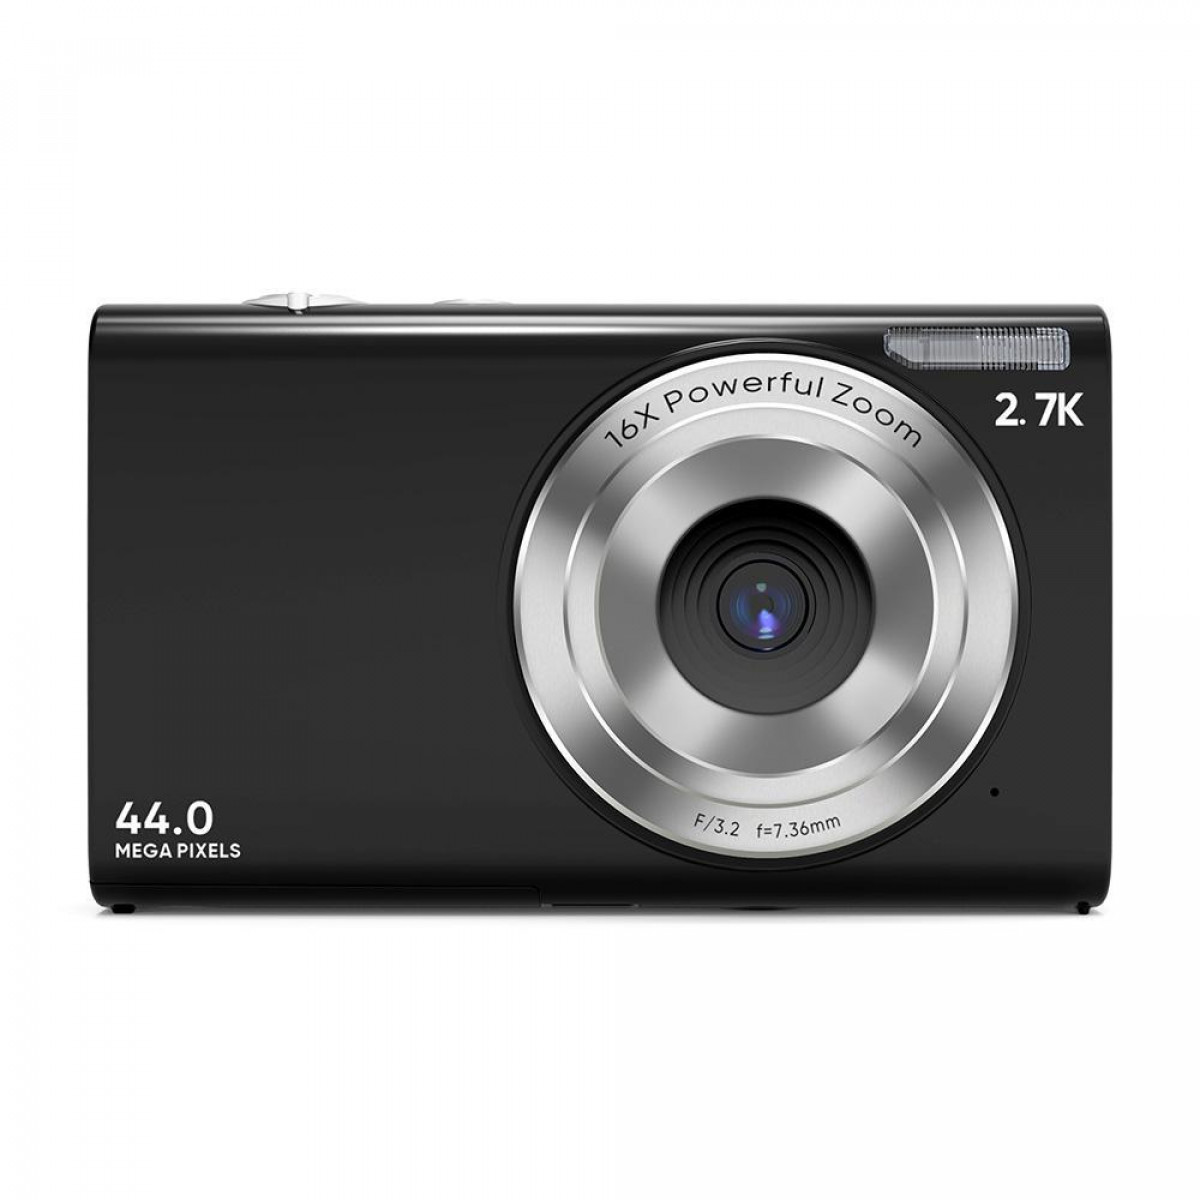 INF Digitalkamera 2.7K / 44MP 16x / Digitalkamera LCD- Zoom schwarz